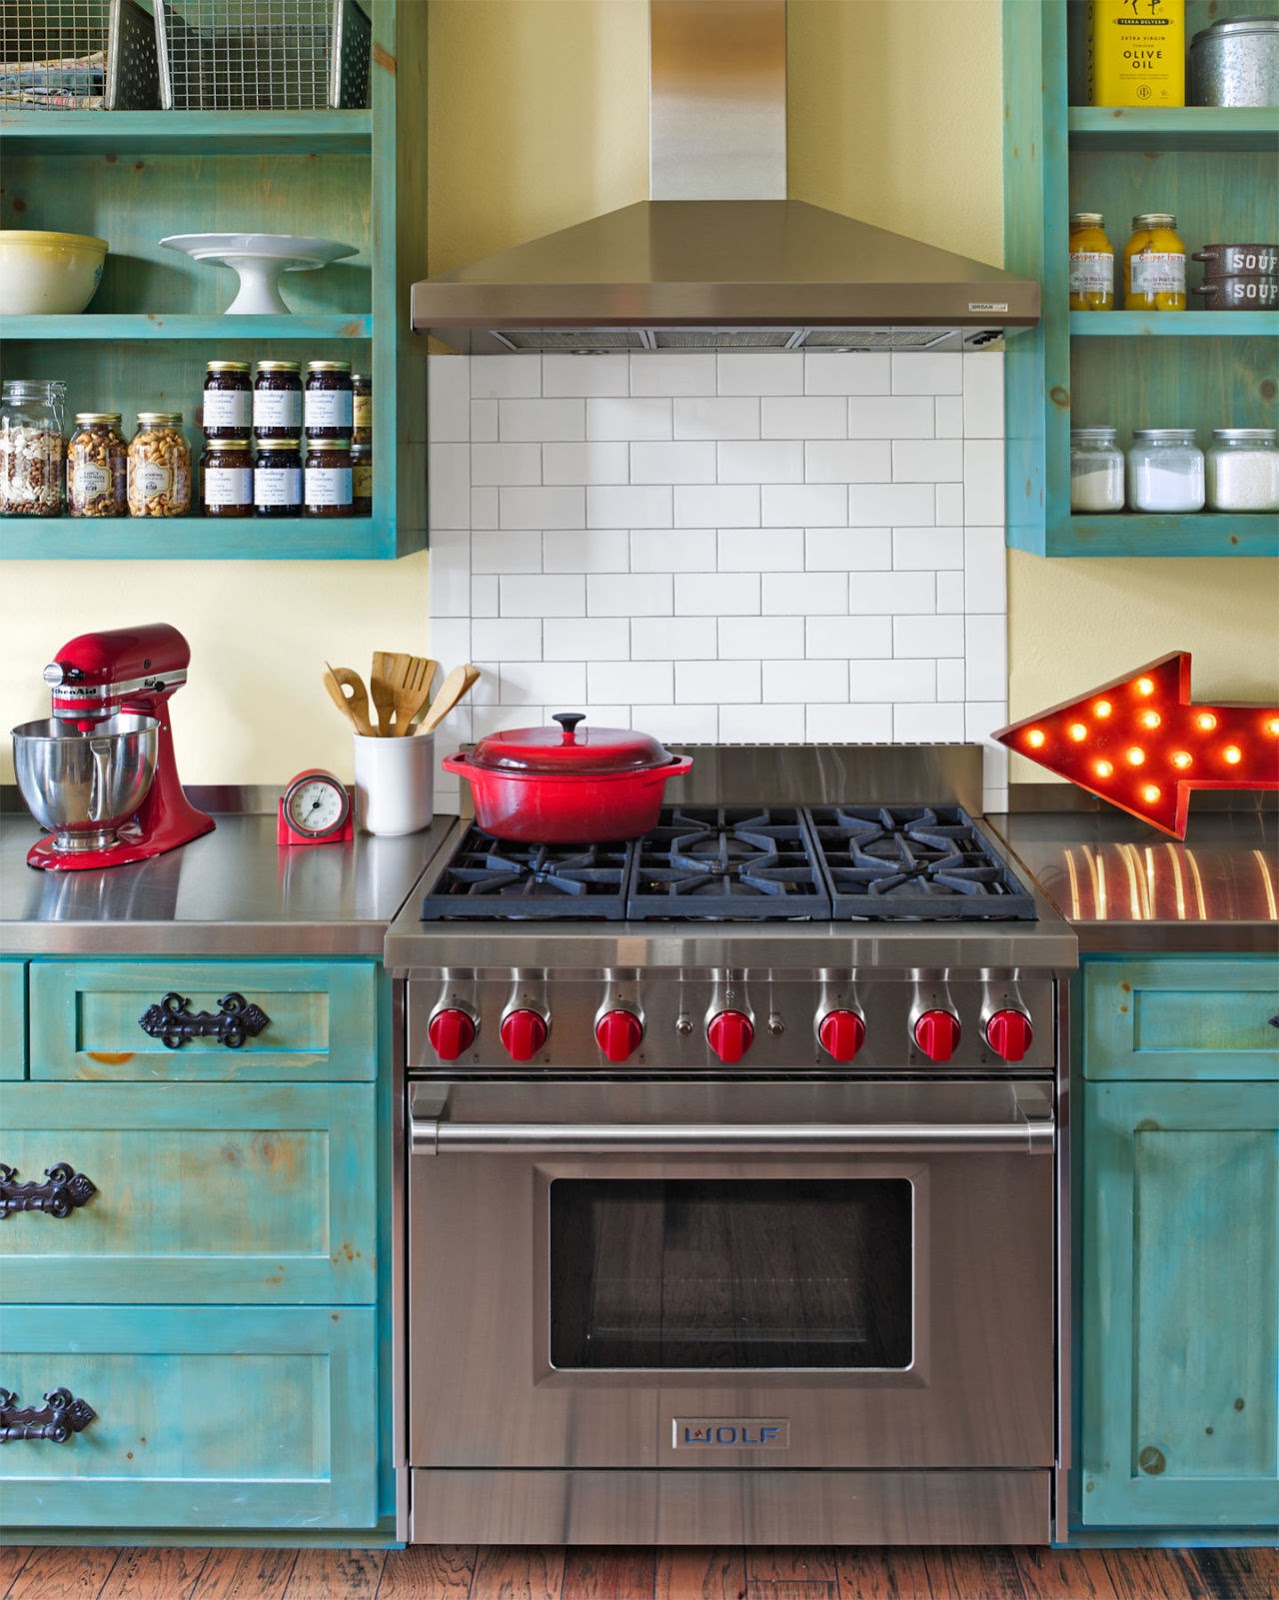 Decor Inspiration /// Colorful Kitchens That Work | Design ...